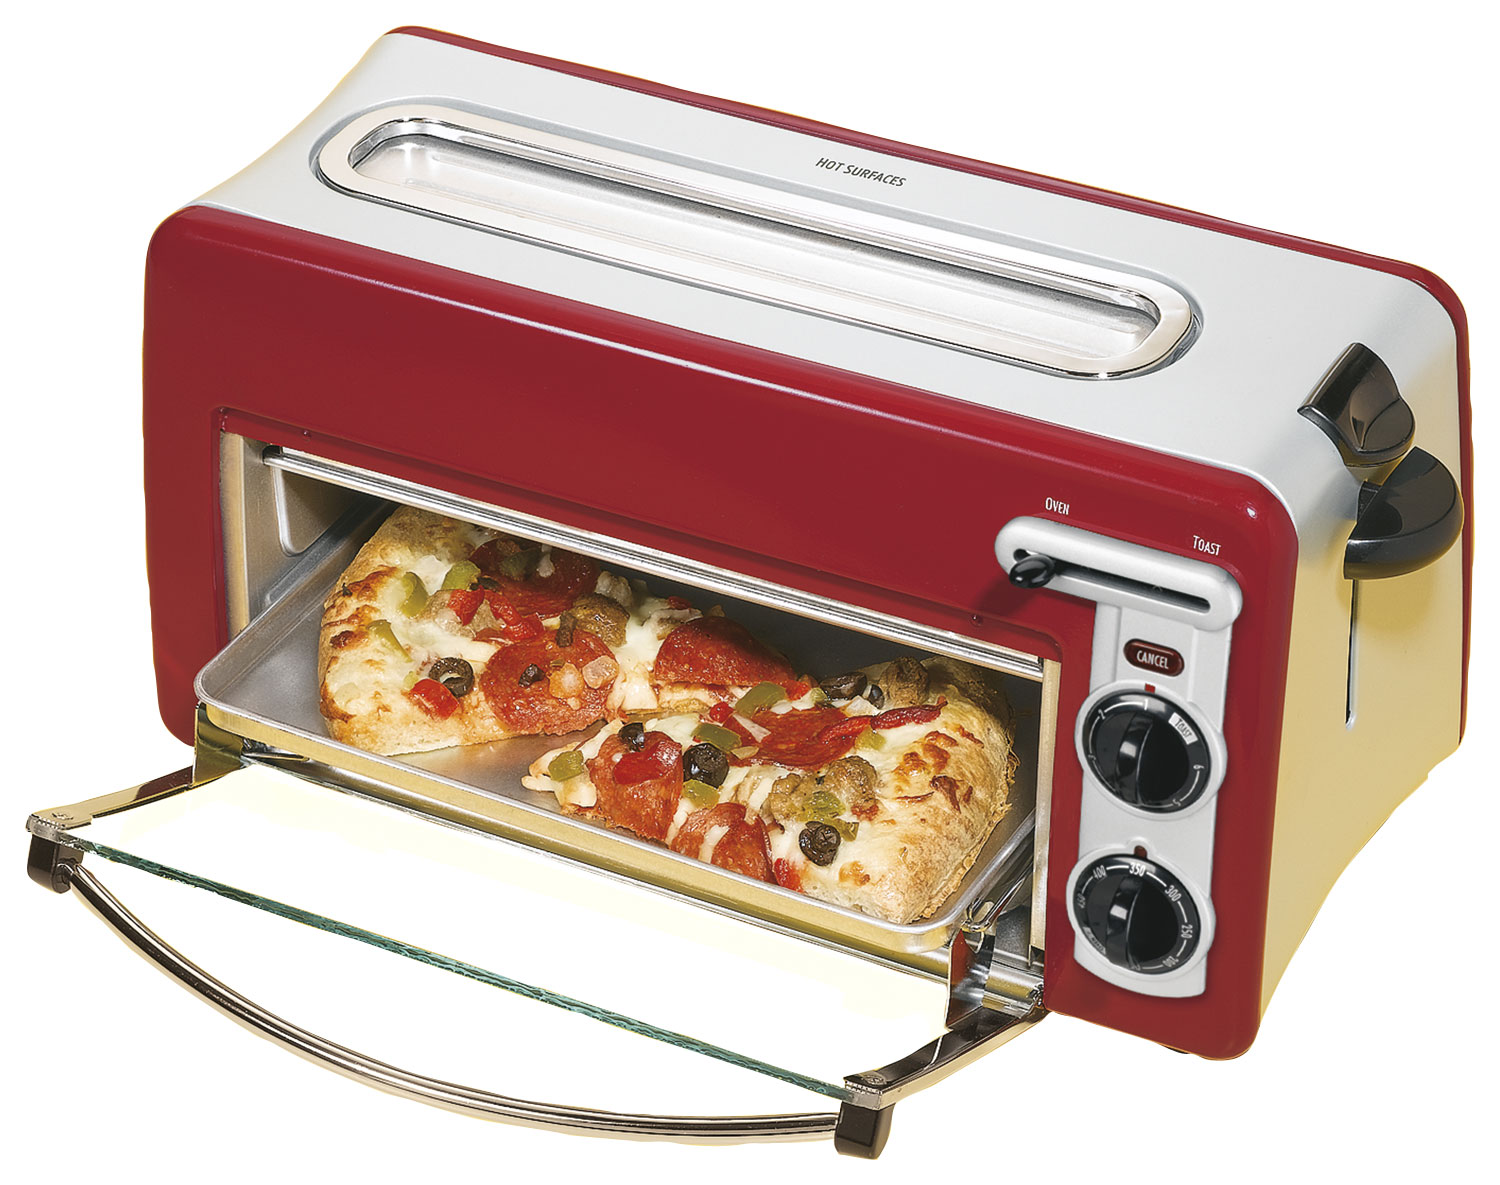 Best Buy: Hamilton Beach 6-Slice Convection Toaster Oven Metallic Red 31514